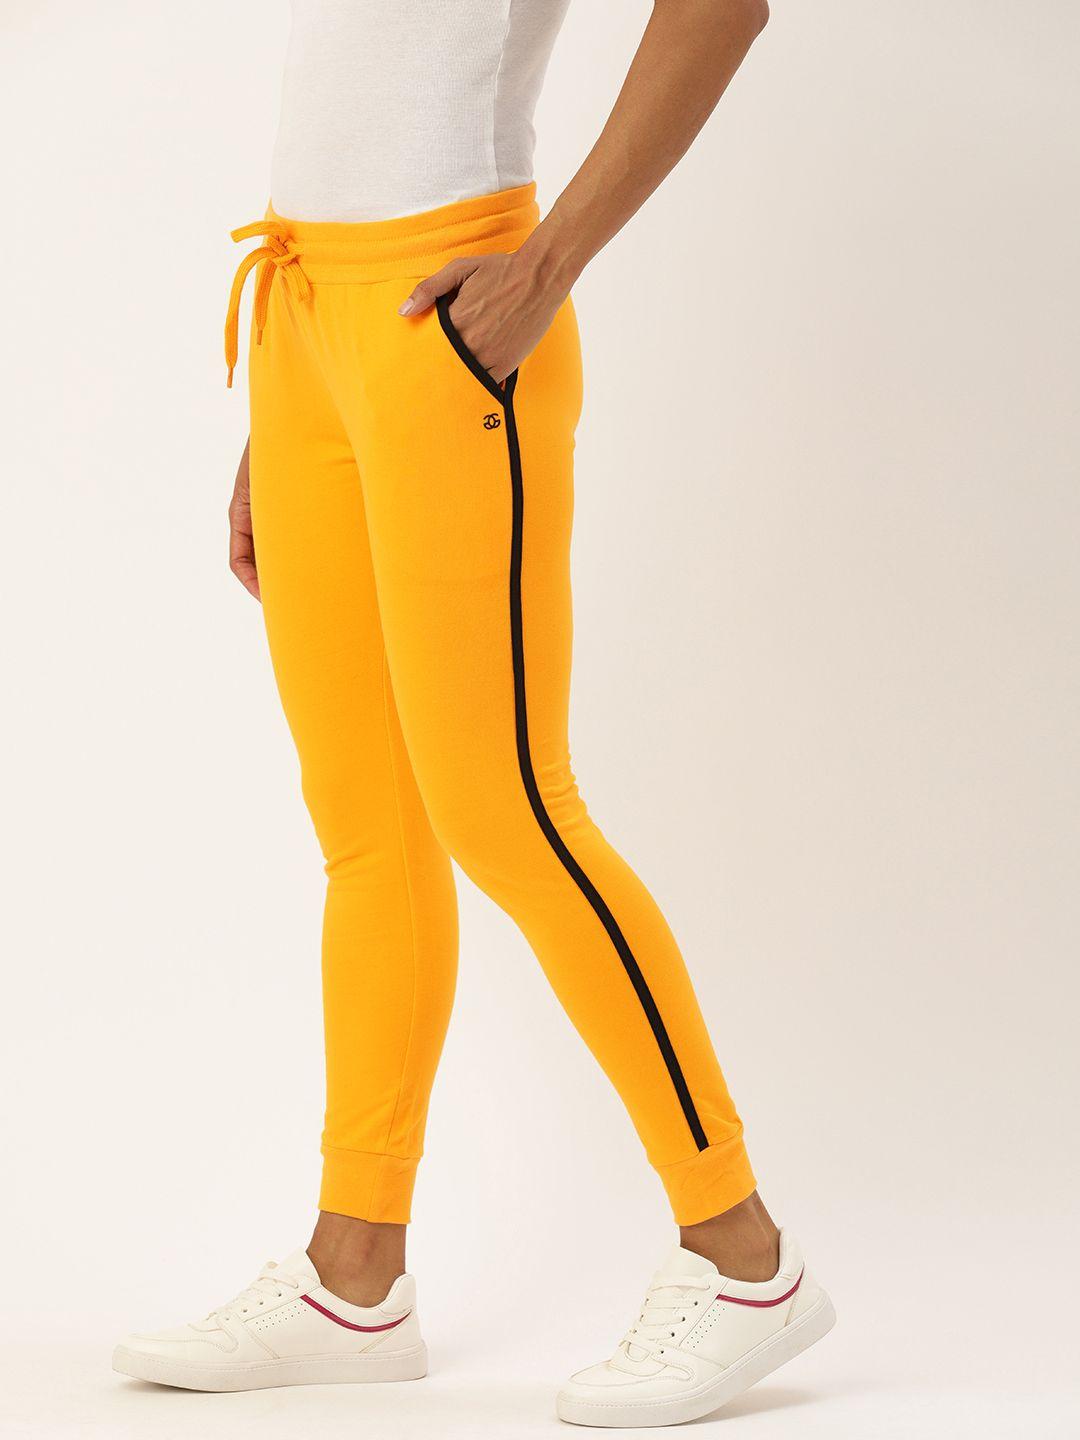 genius18 women yellow & black striped slim fit joggers